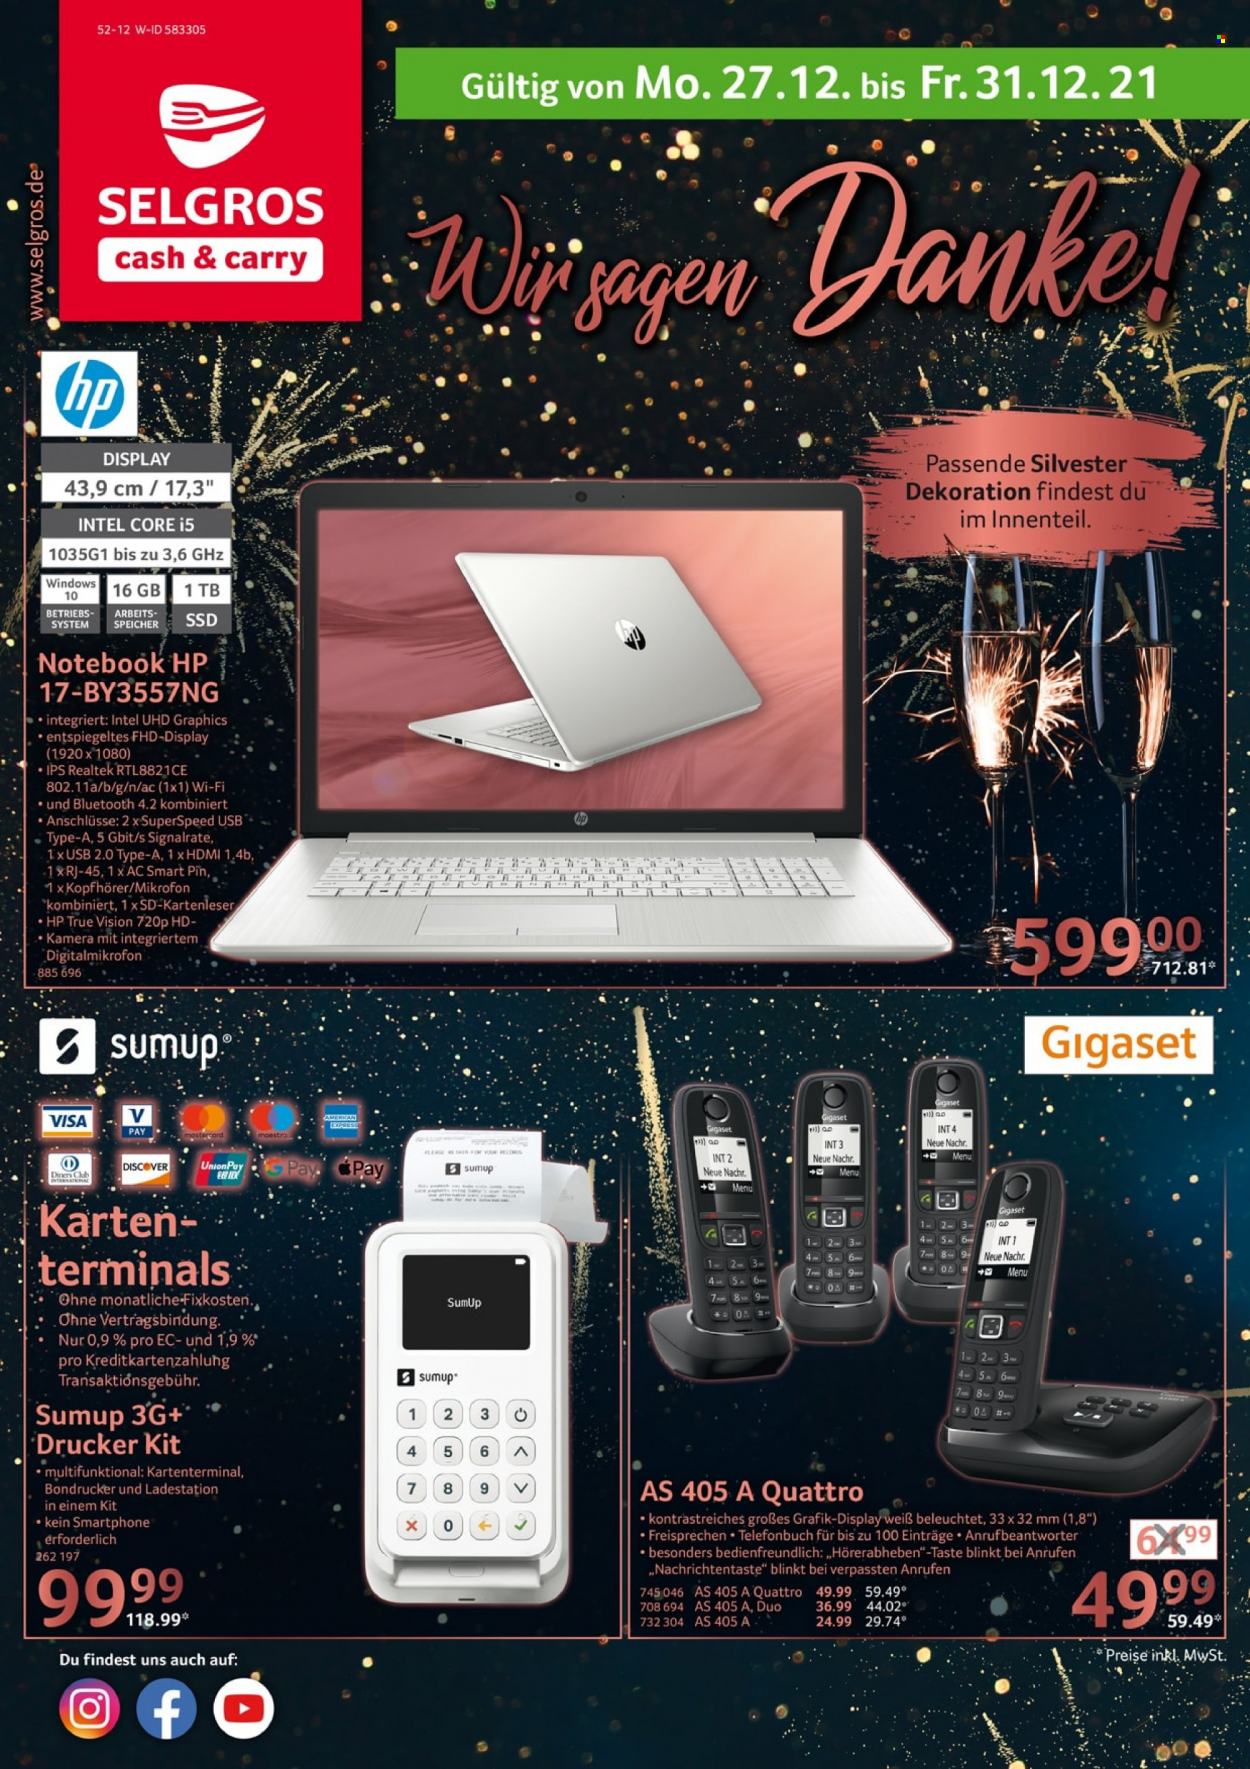 thumbnail - Prospekte Selgros - 27.12.2021 - 31.12.2021 - Produkte in Aktion - Gigaset, Smartphone, HP, Kopfhörer, Dekoration. Seite 1.